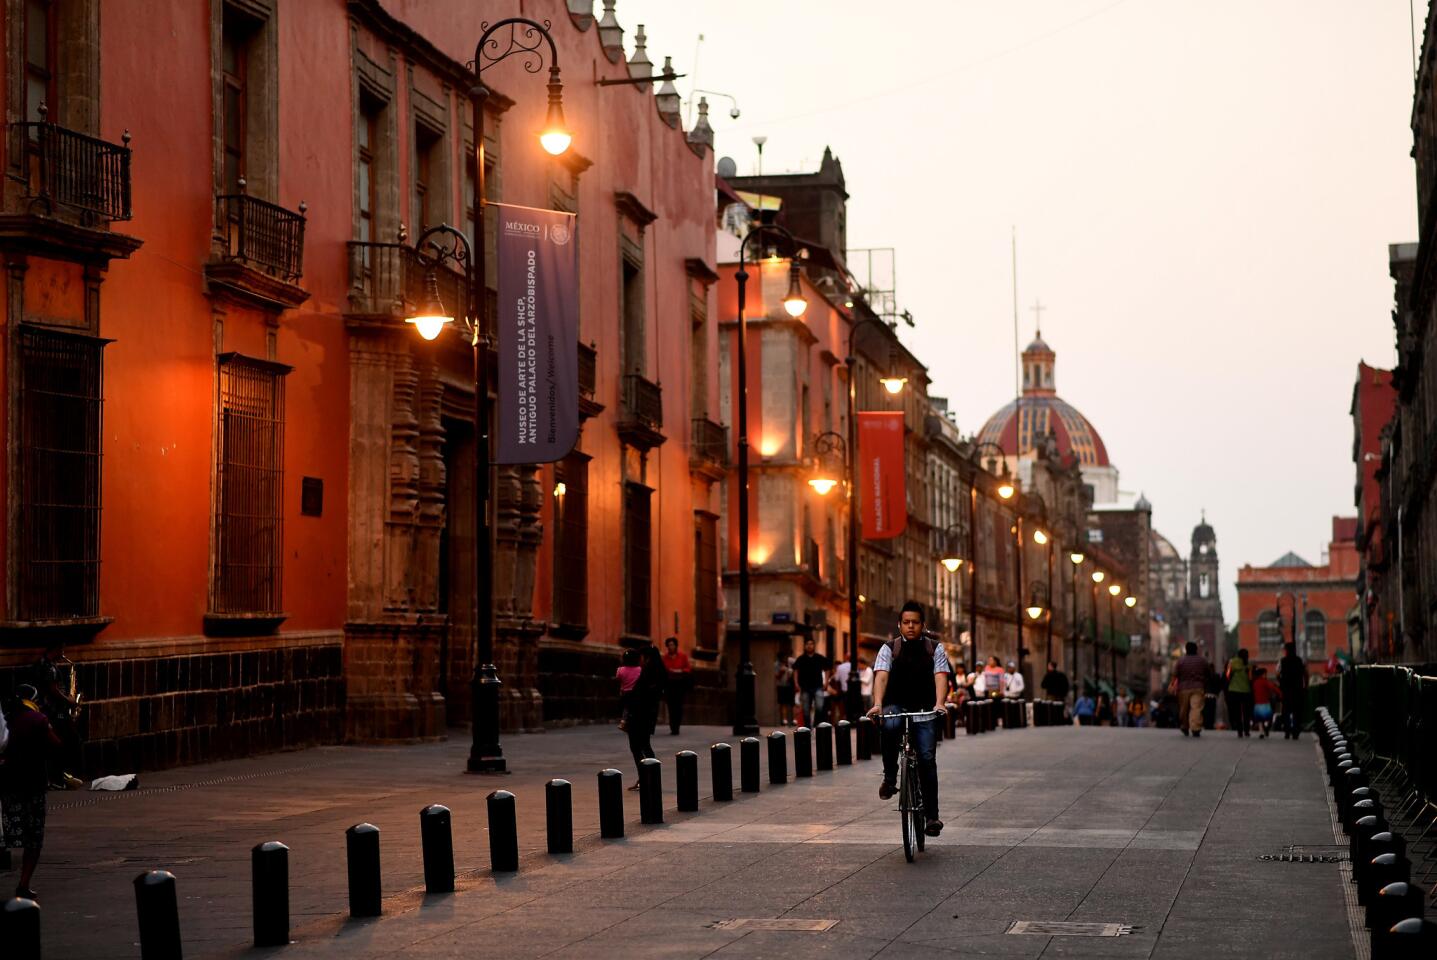 A street scene of Zocalo in Mexico City.